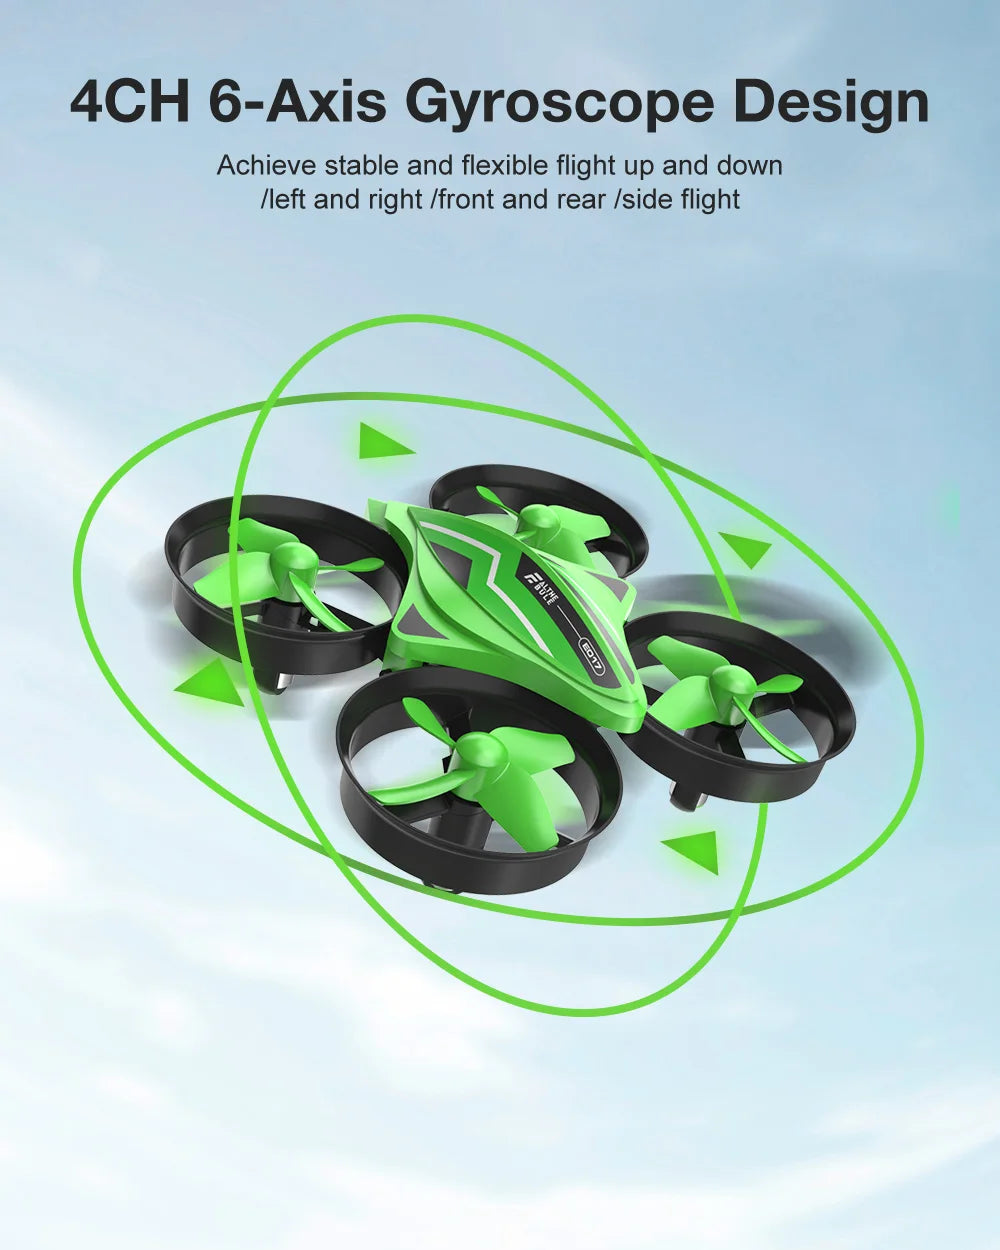 Eachine E017 Mini Drone, 6ch gyroscope design achieve stable and flexible flight